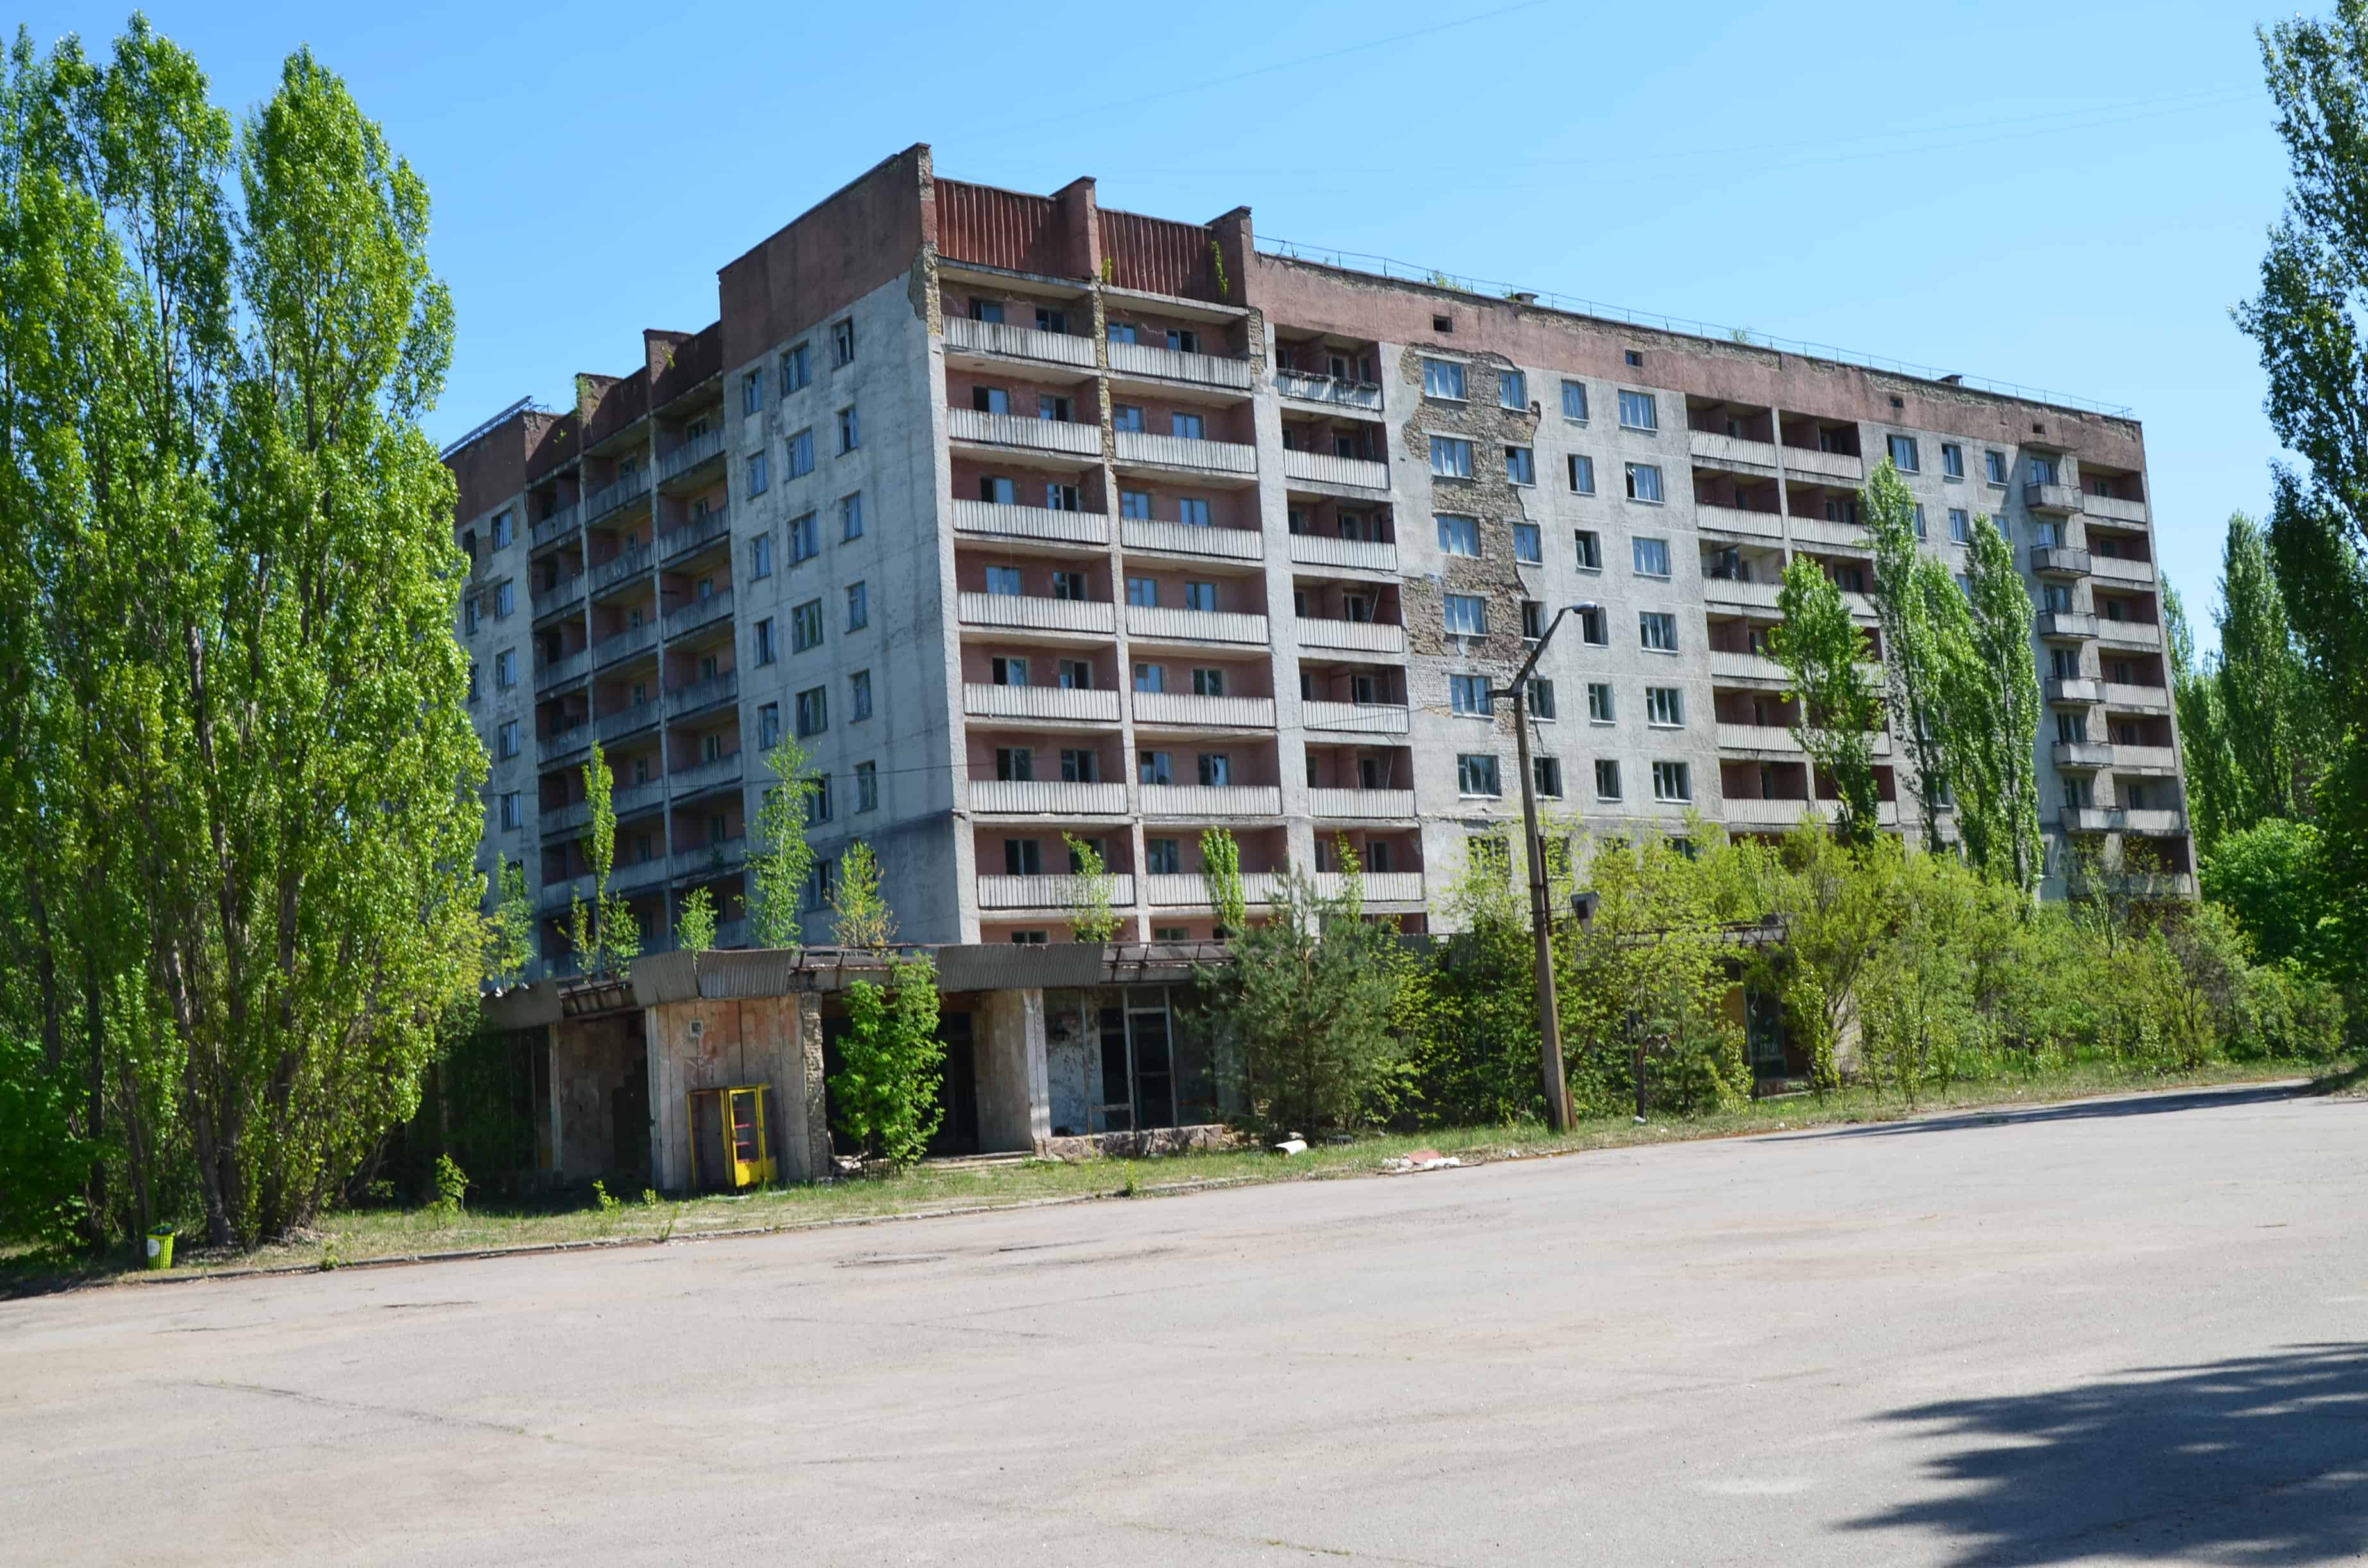 32/13 Lenin Avenue in Pripyat, Chernobyl Exclusion Zone, Ukraine